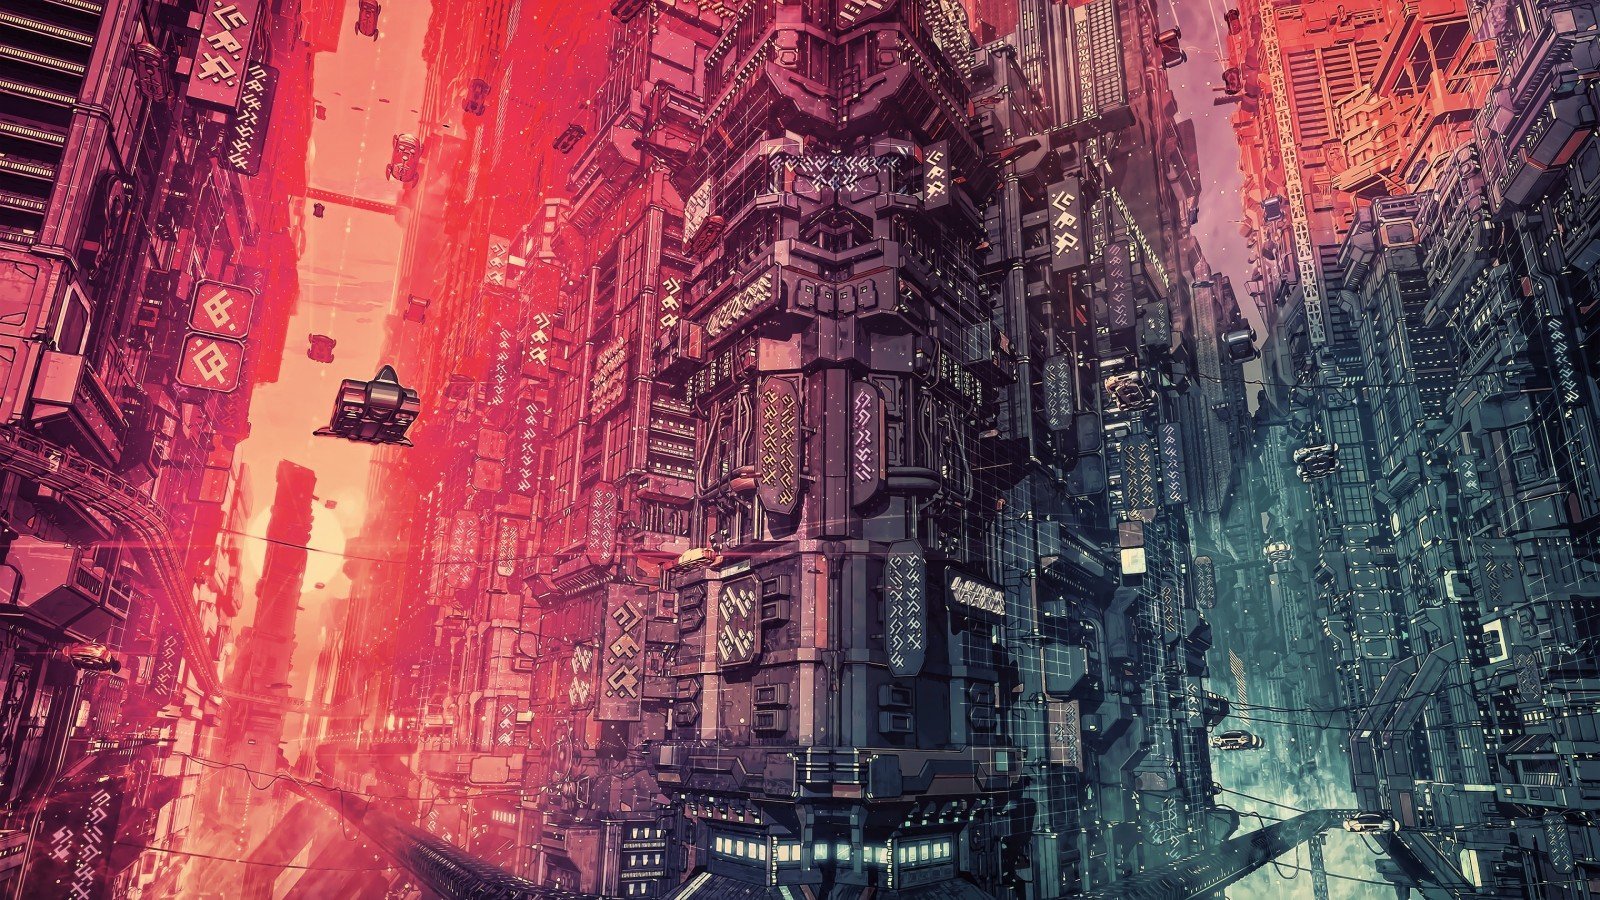 Cyberpunk city wallpaper for phone фото 34